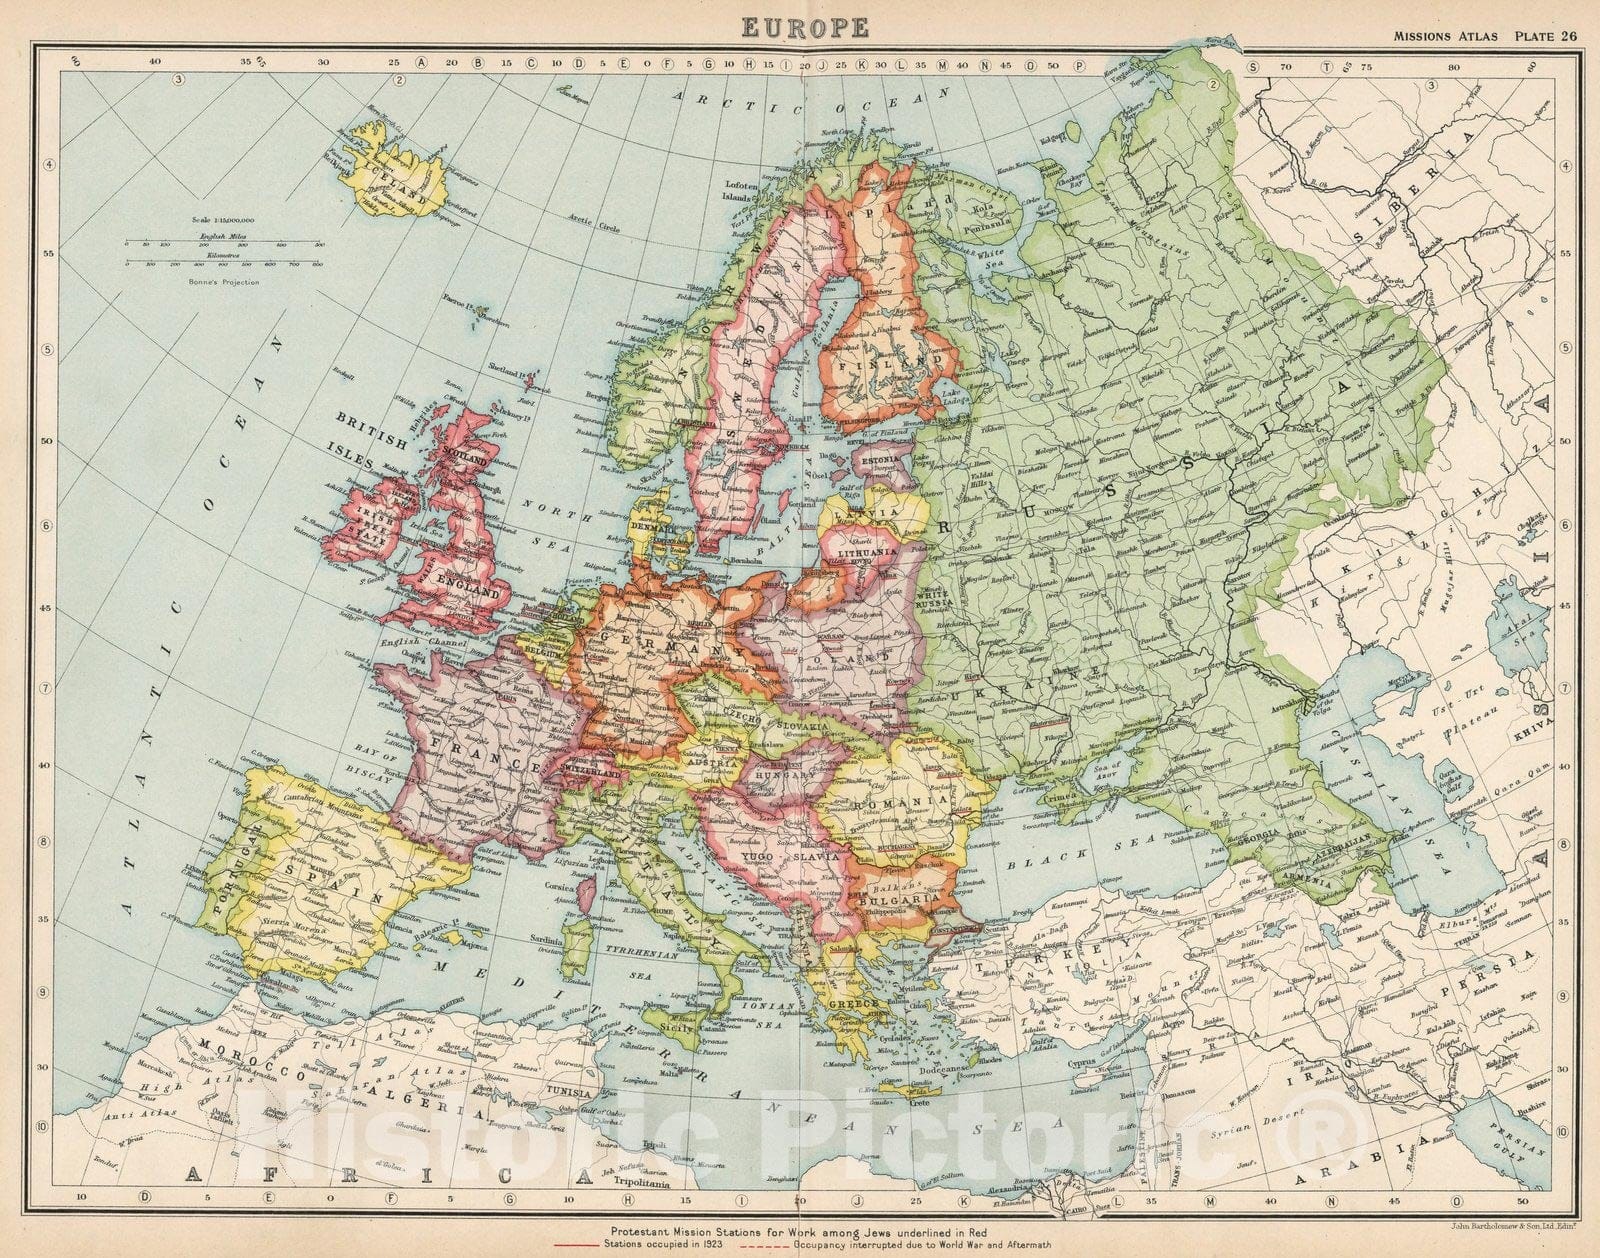 Western European Countries - WorldAtlas